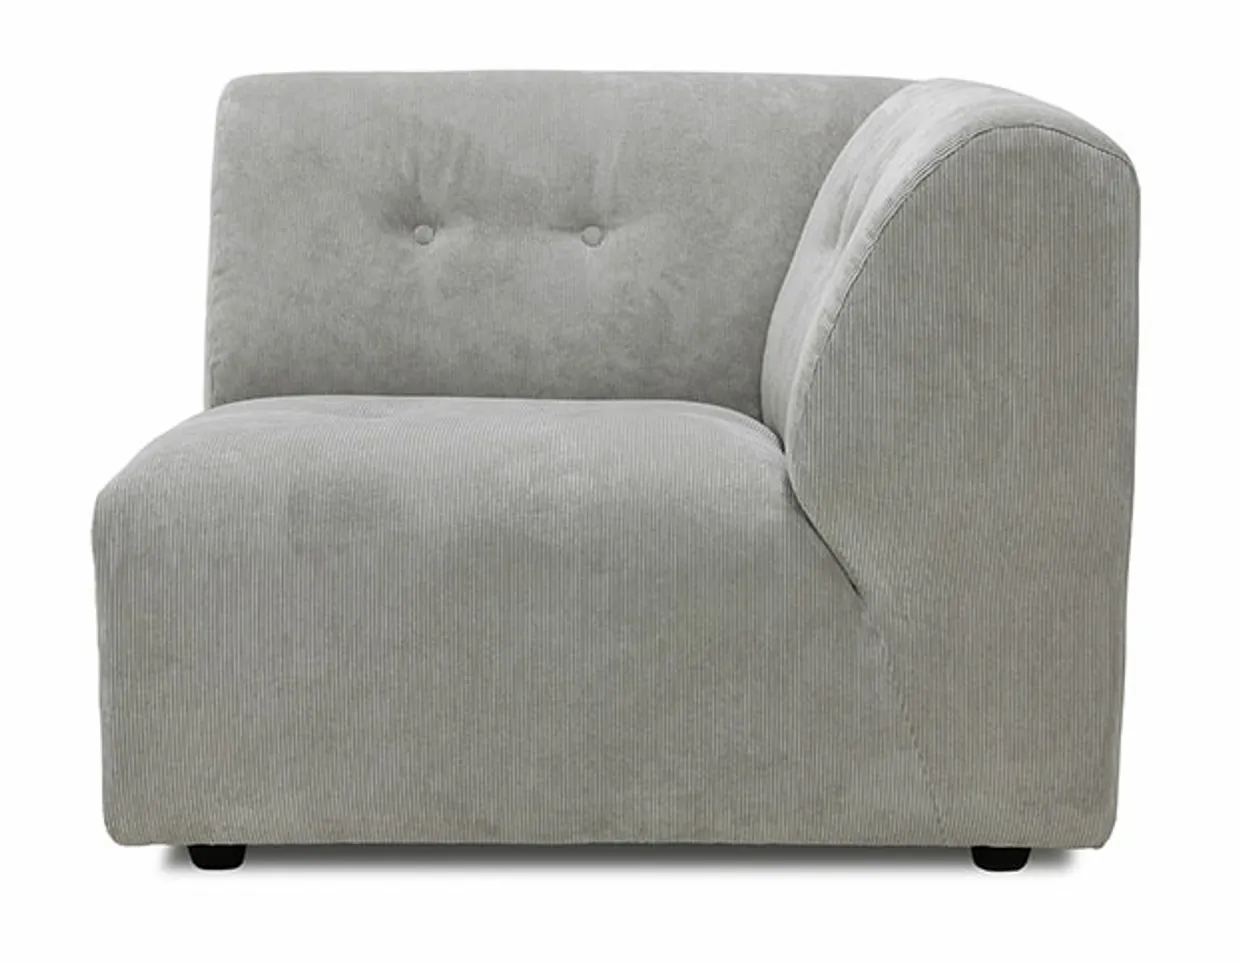 Vint couch: element right, corduroy rib, cream